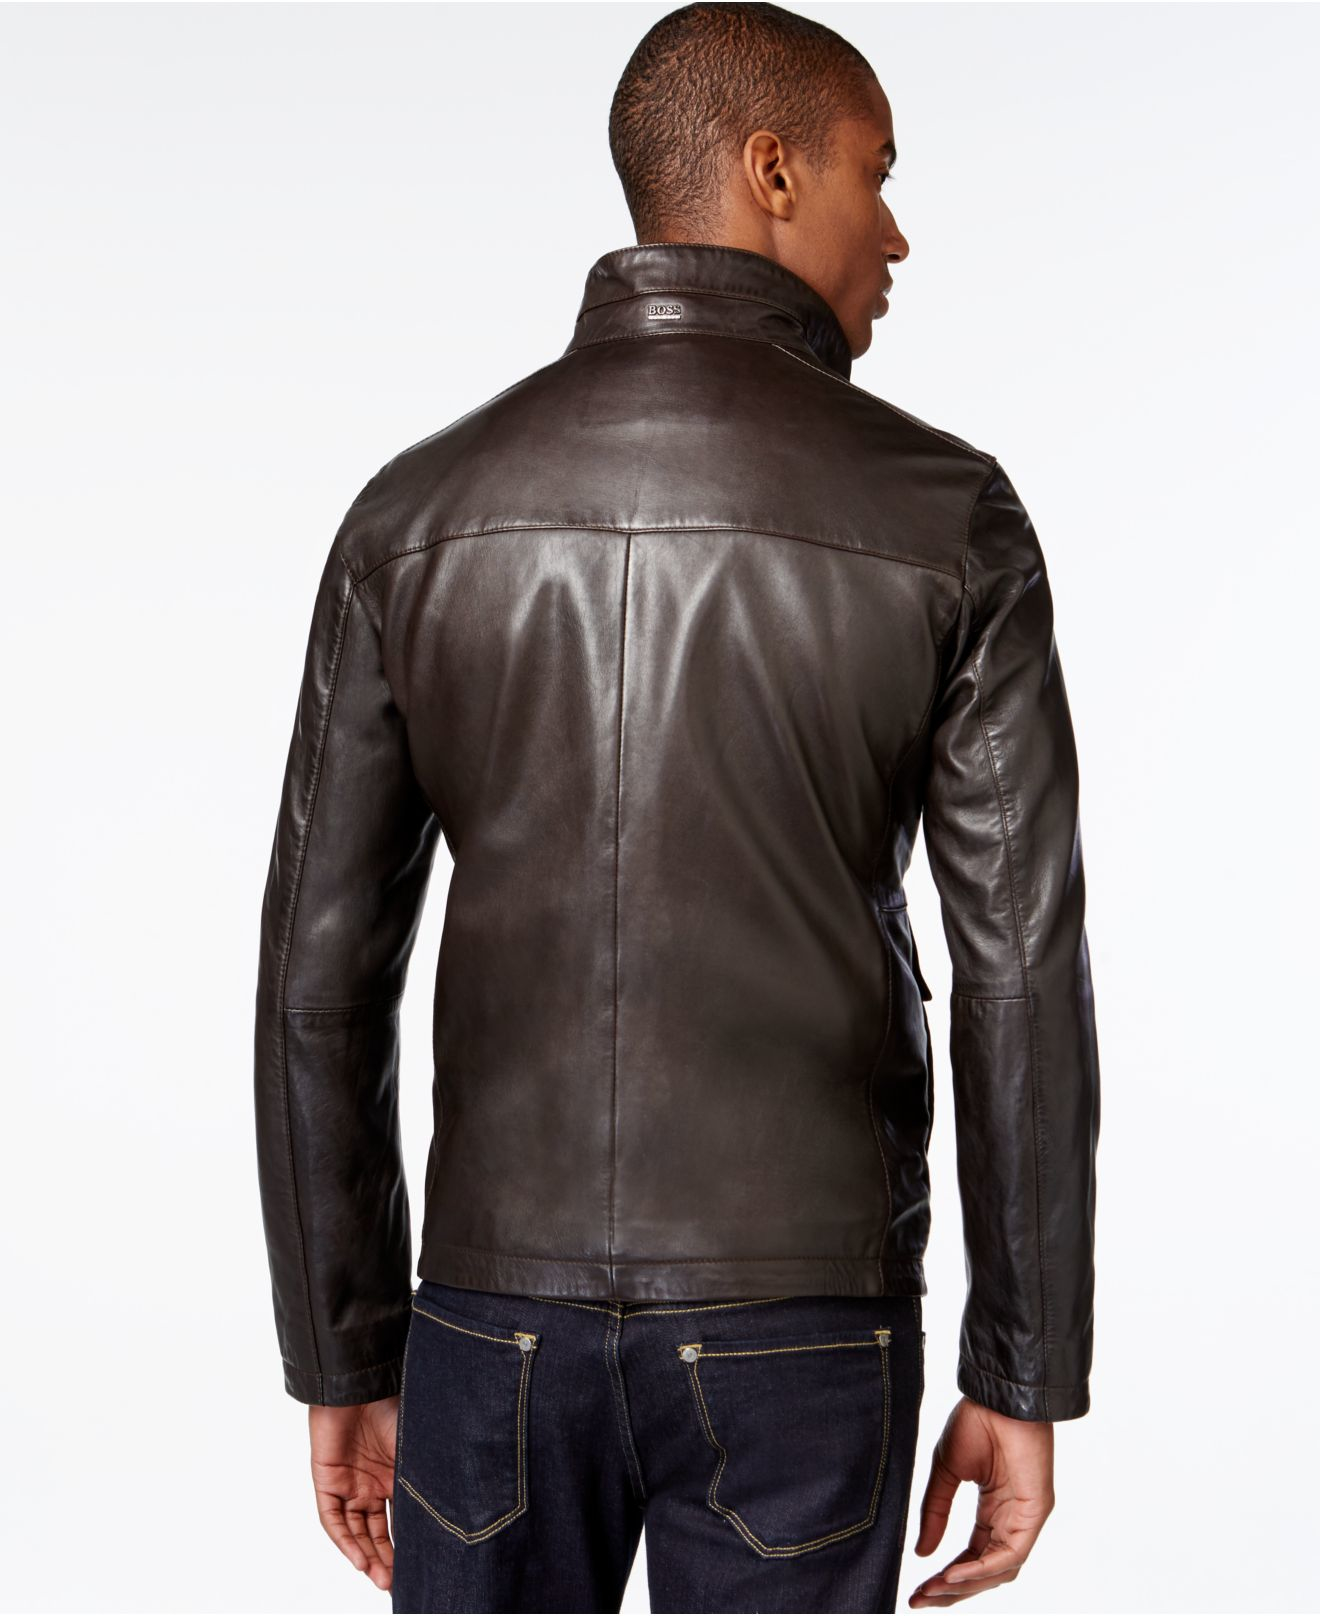 BOSS by HUGO BOSS Boss Morano 2-in-1 Leather Jacket in Dark Brown (Brown)  for Men - Lyst